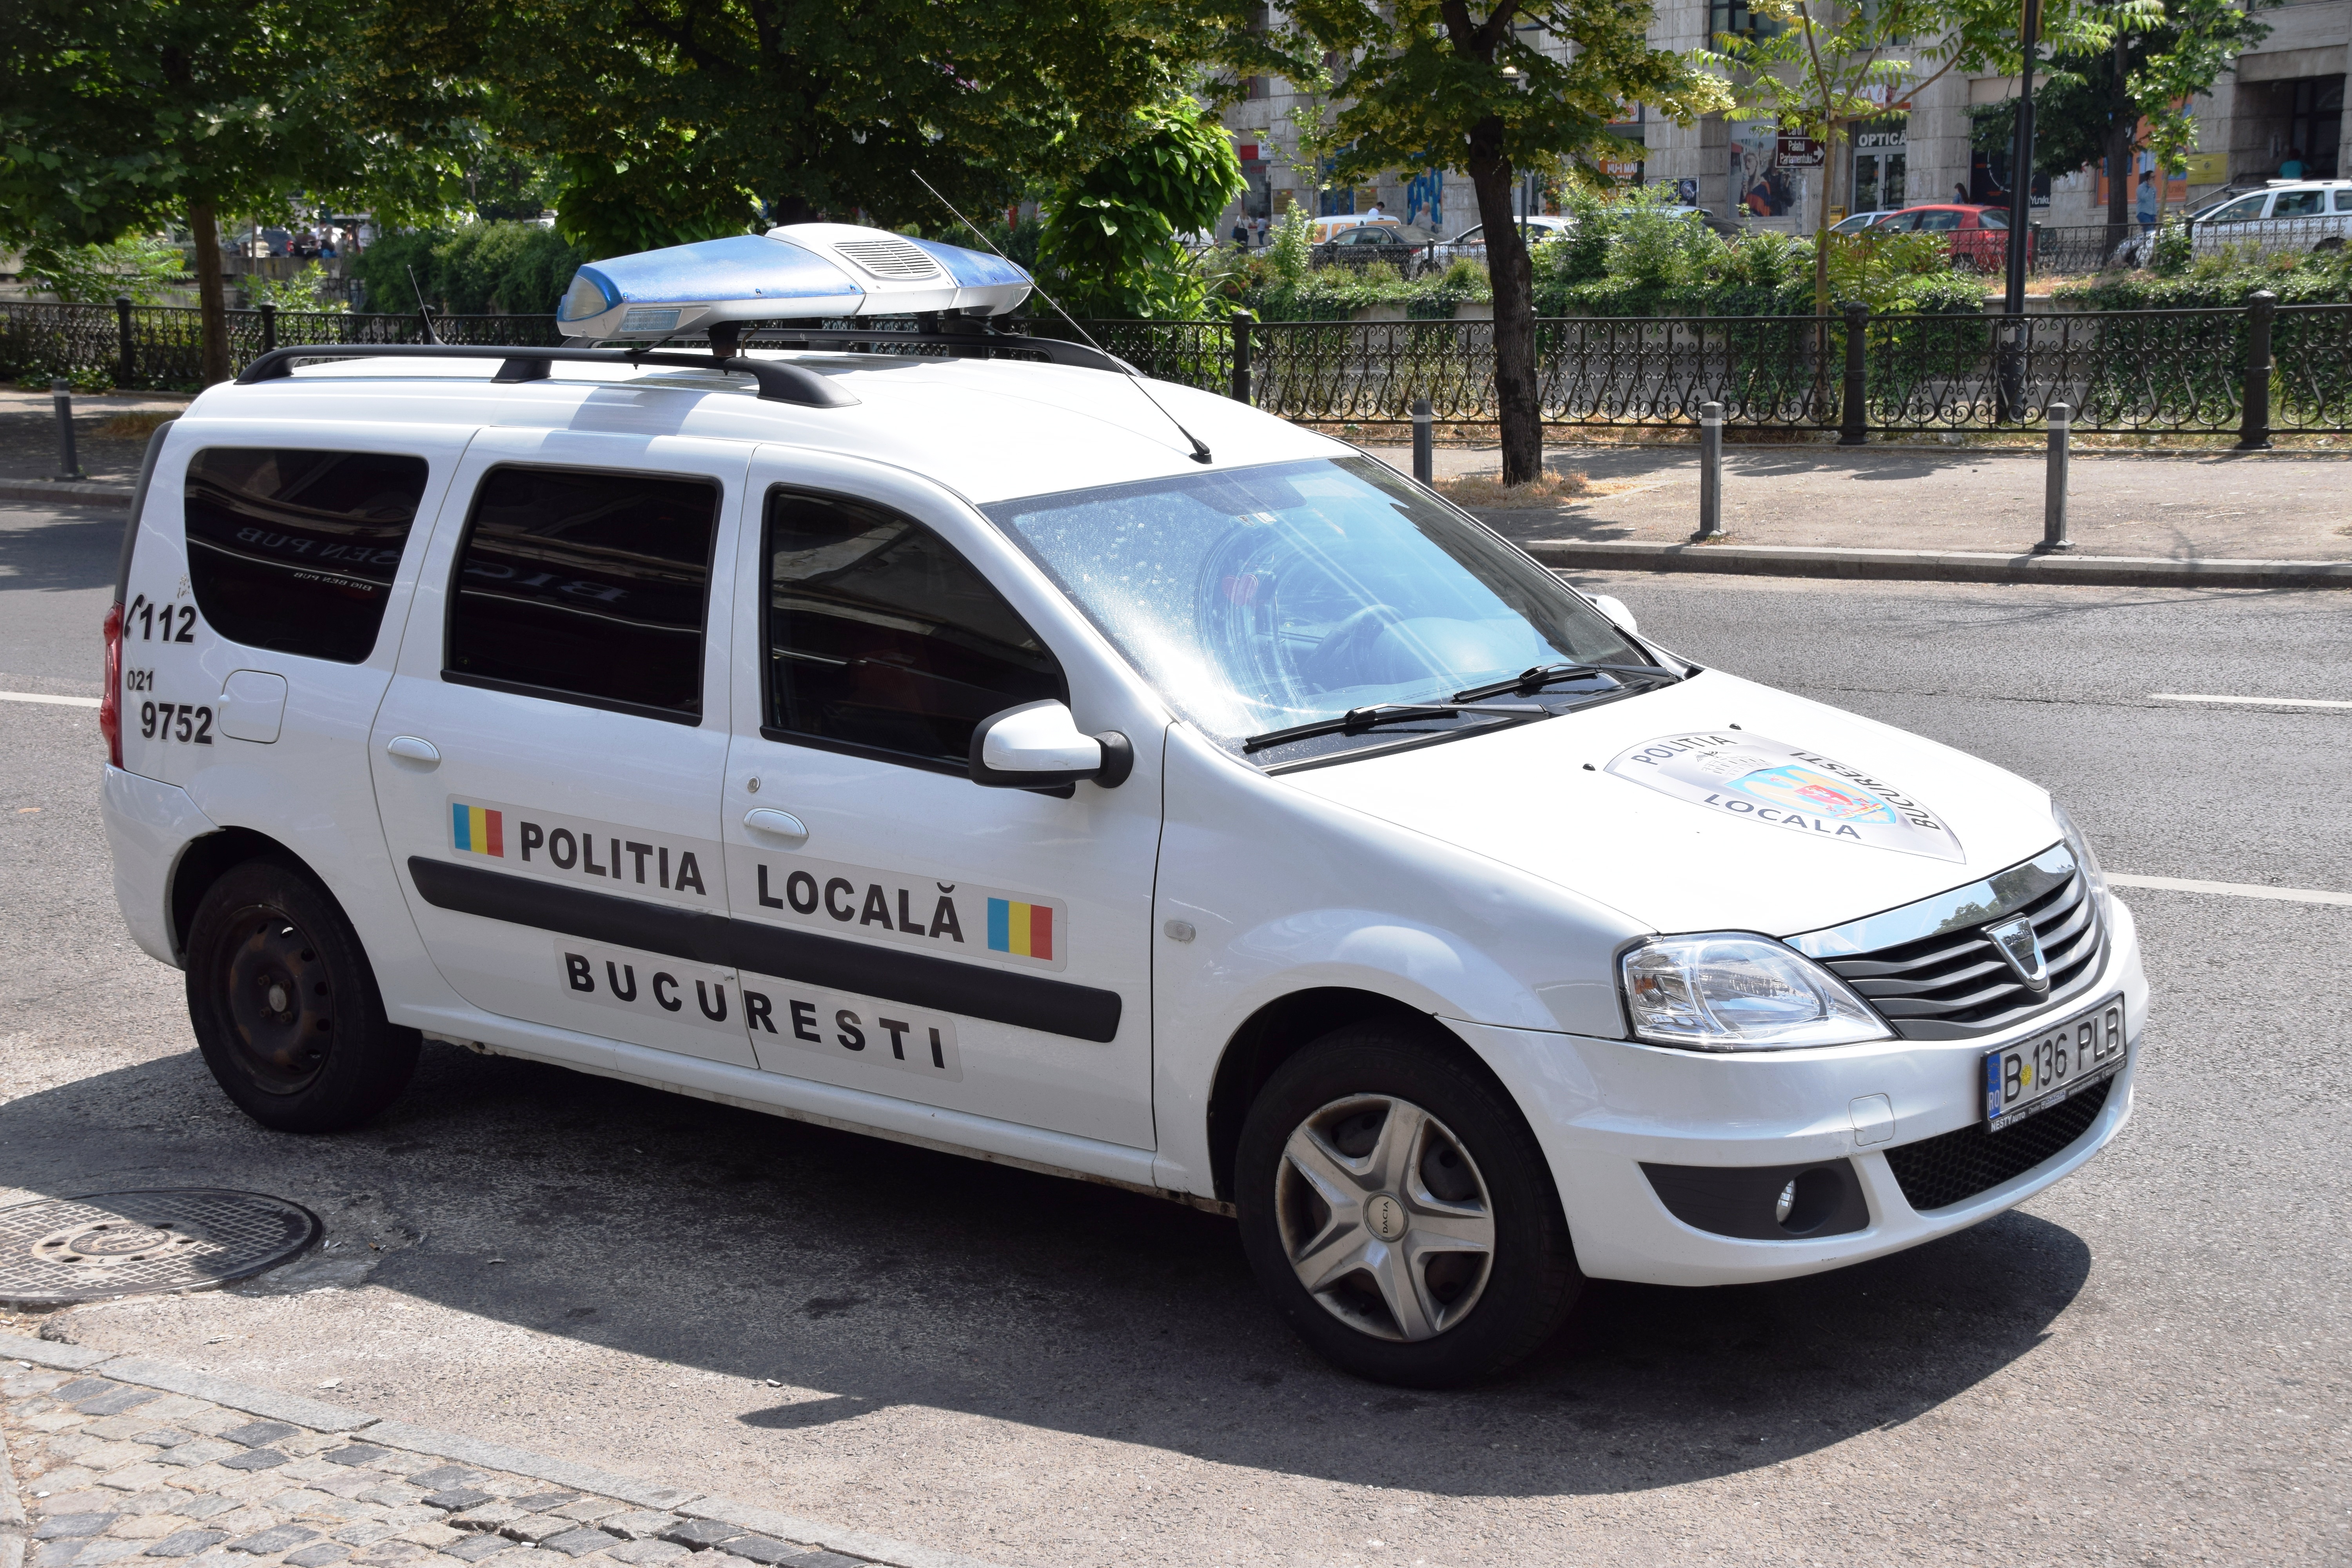 Fișier:Politia Locala Bucharest 08.jpg - Wikipedia